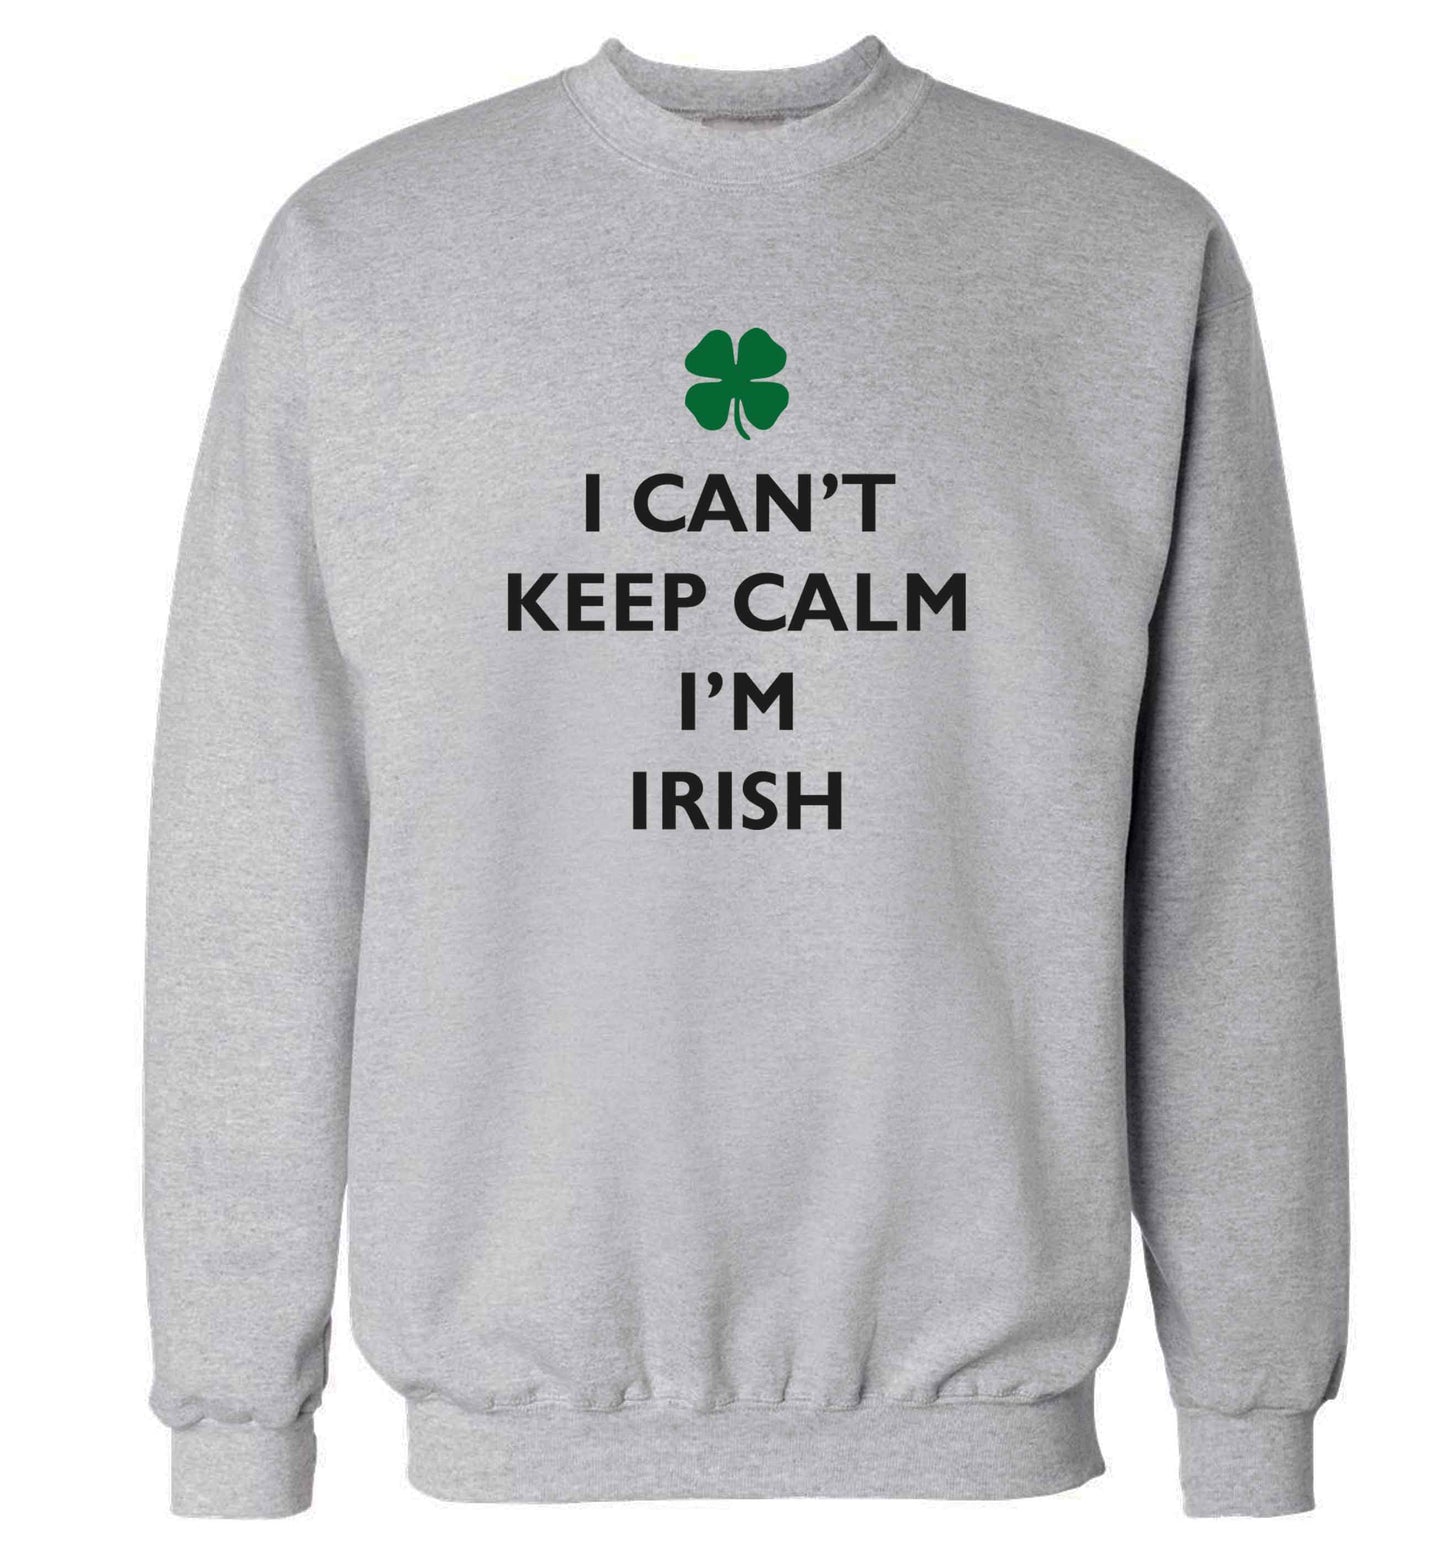 I can't keep calm I'm Irish adult's unisex grey sweater 2XL